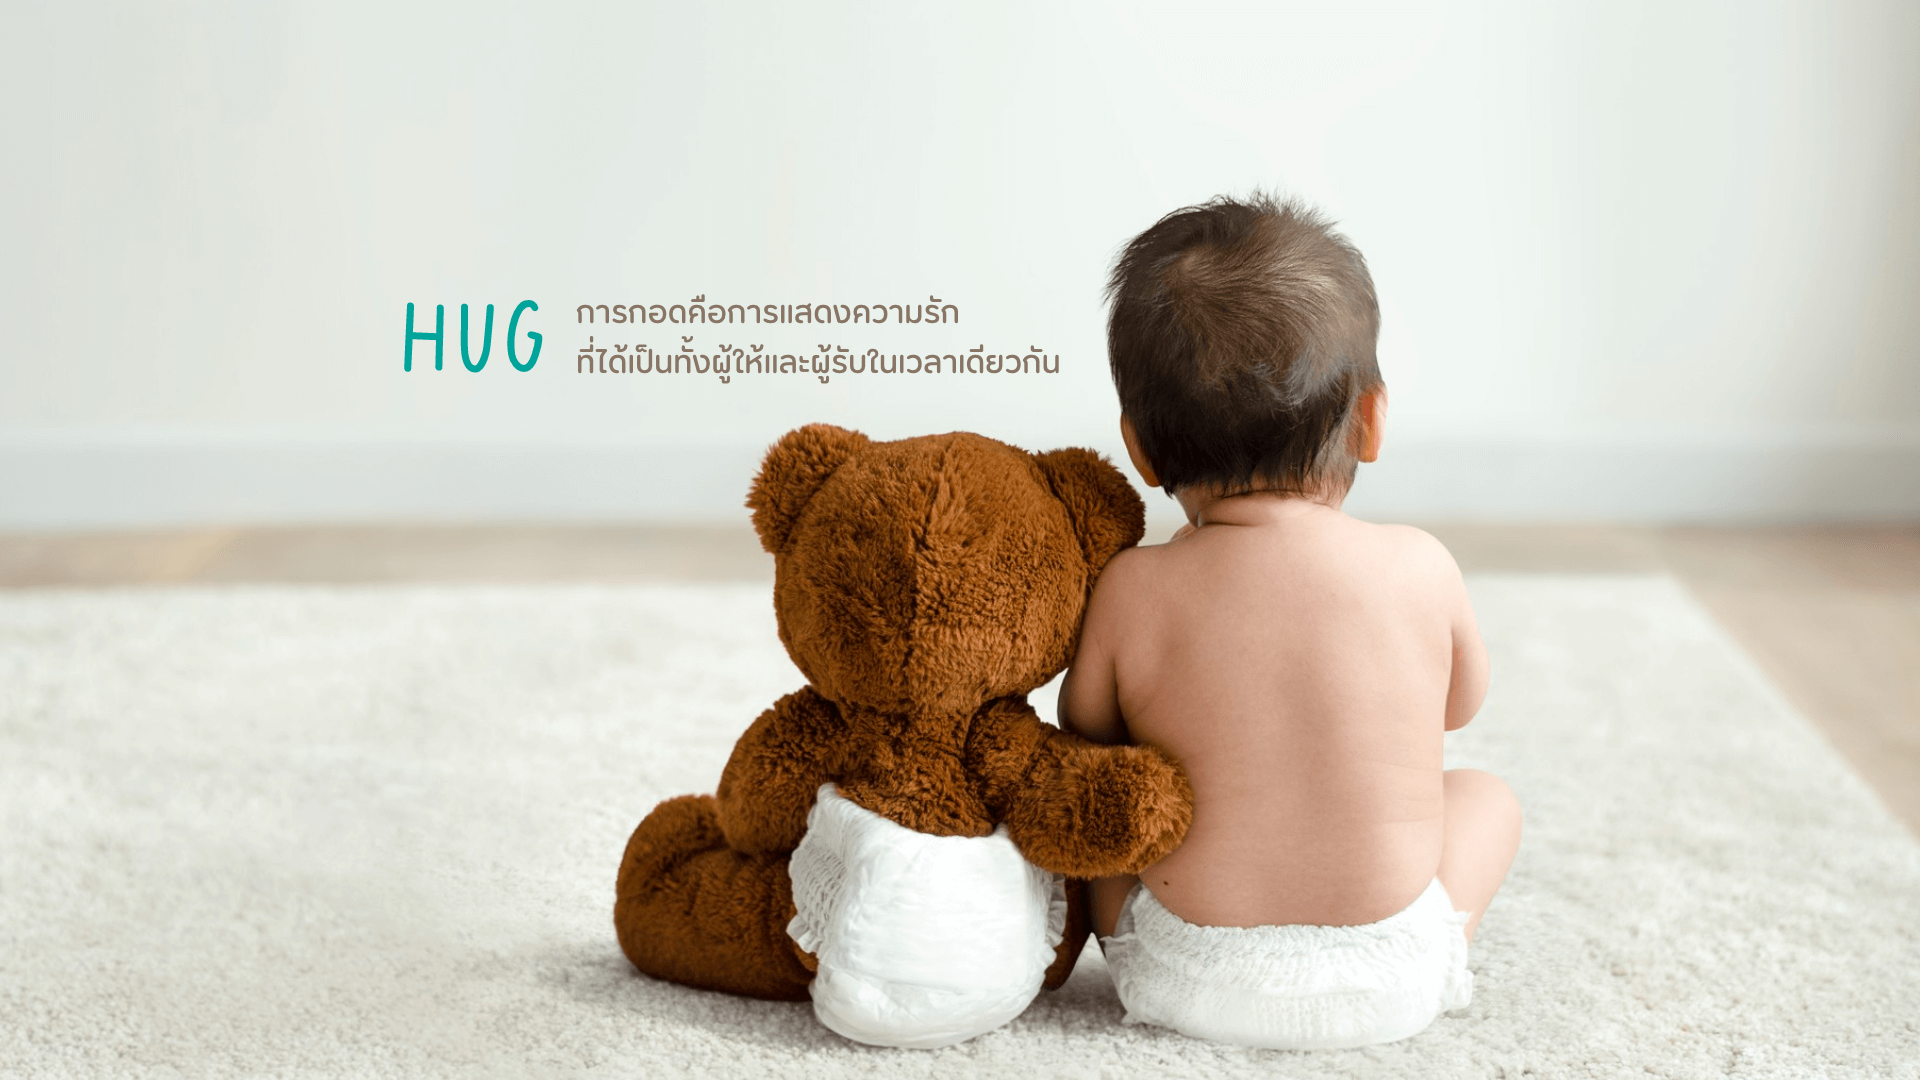 Hug new banner - 01